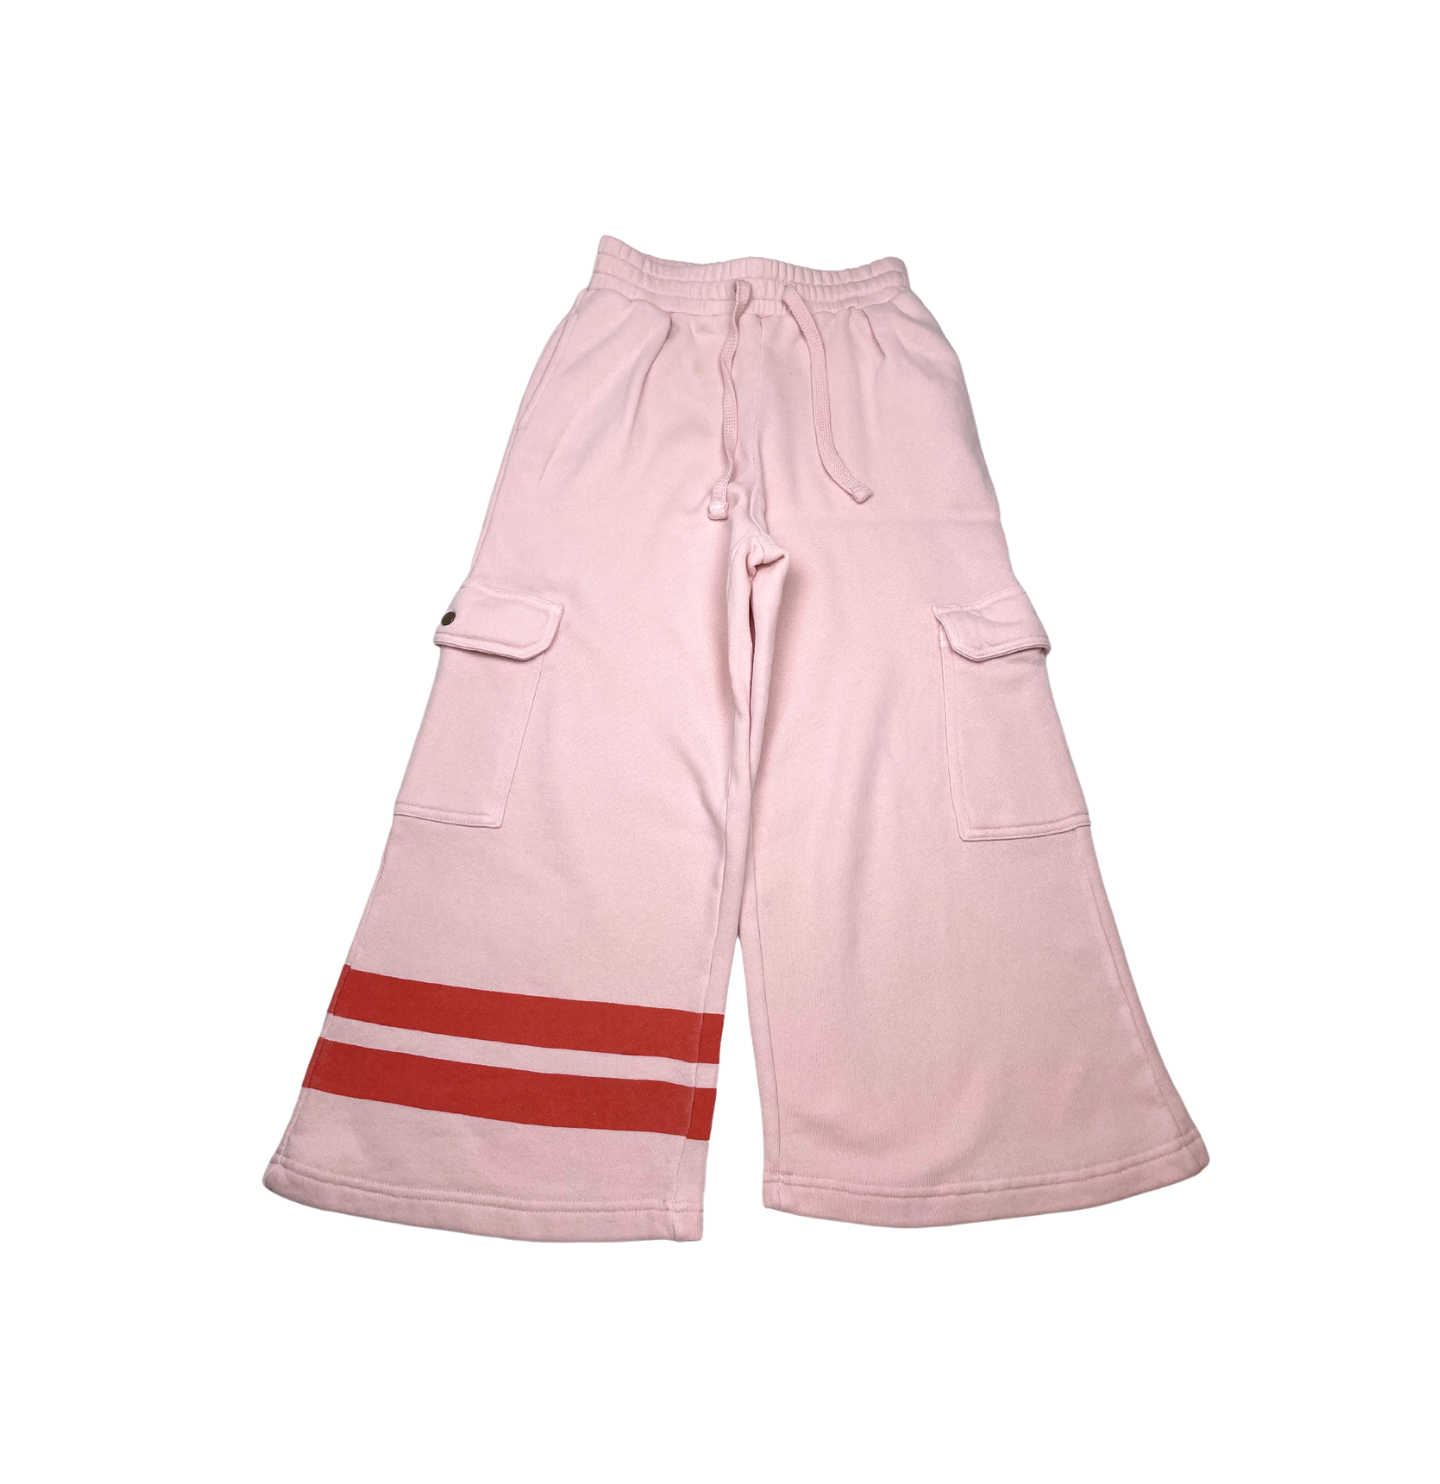 AO76 - Pantalon ample rose - 8 ans